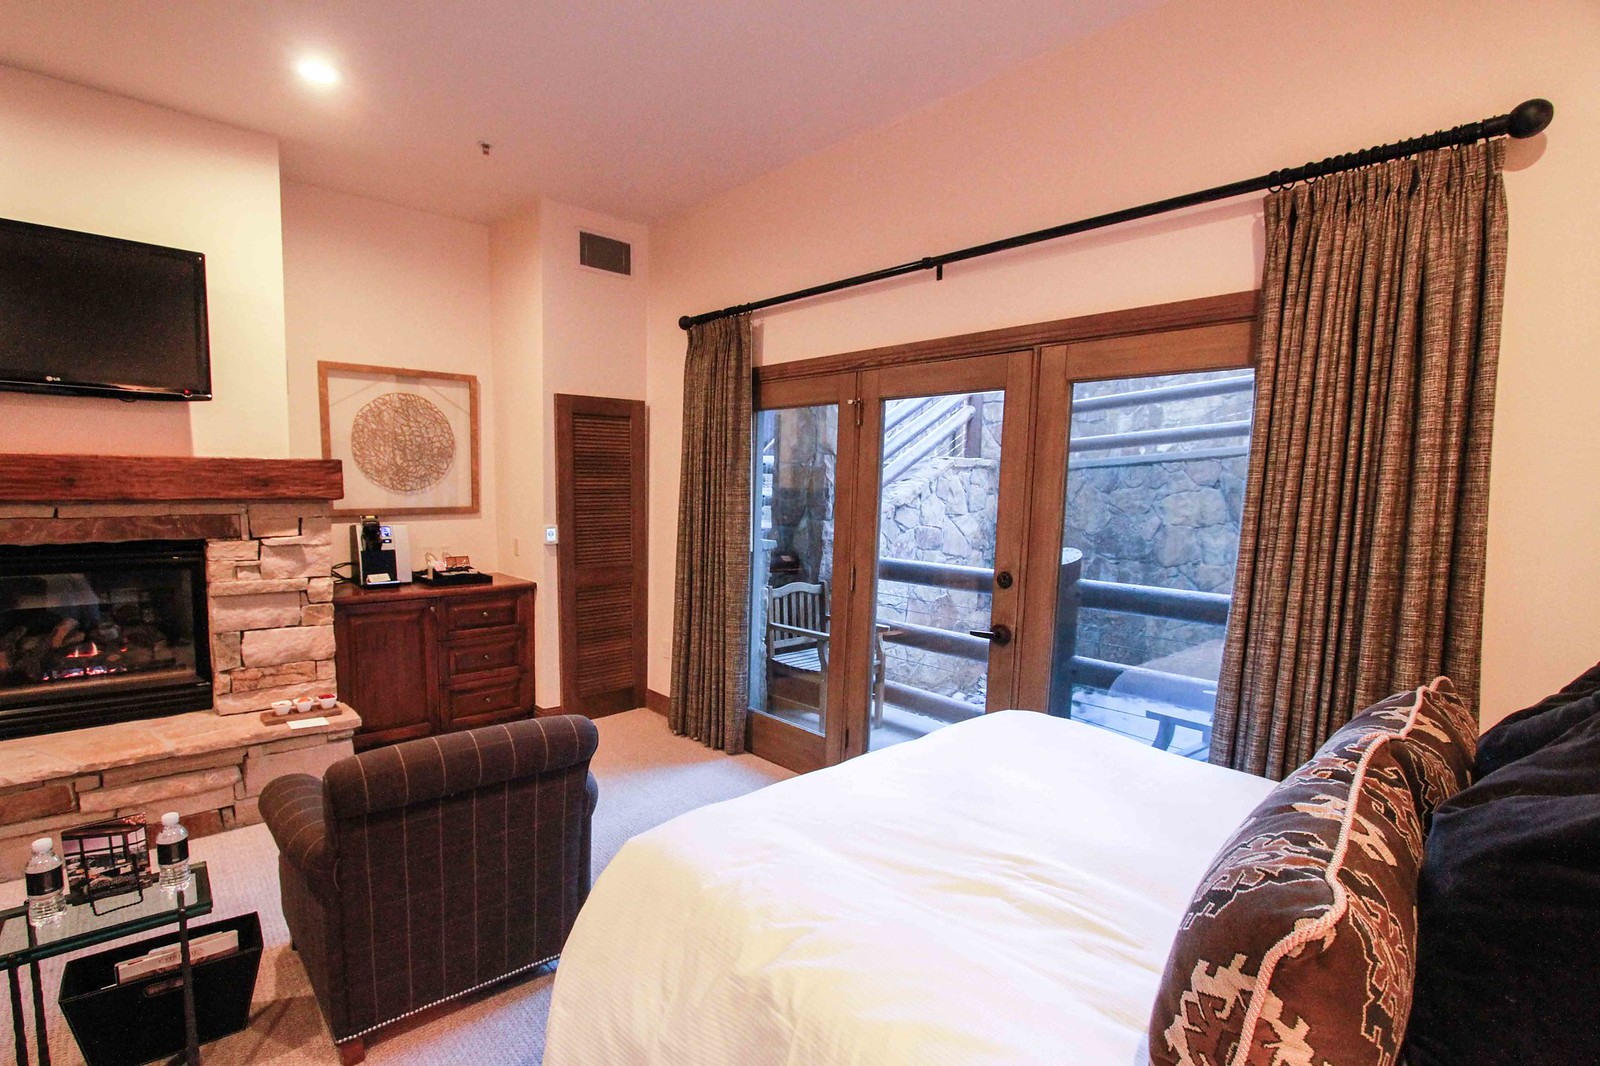 Stein Eriksen Lodge resort review, candace hampton